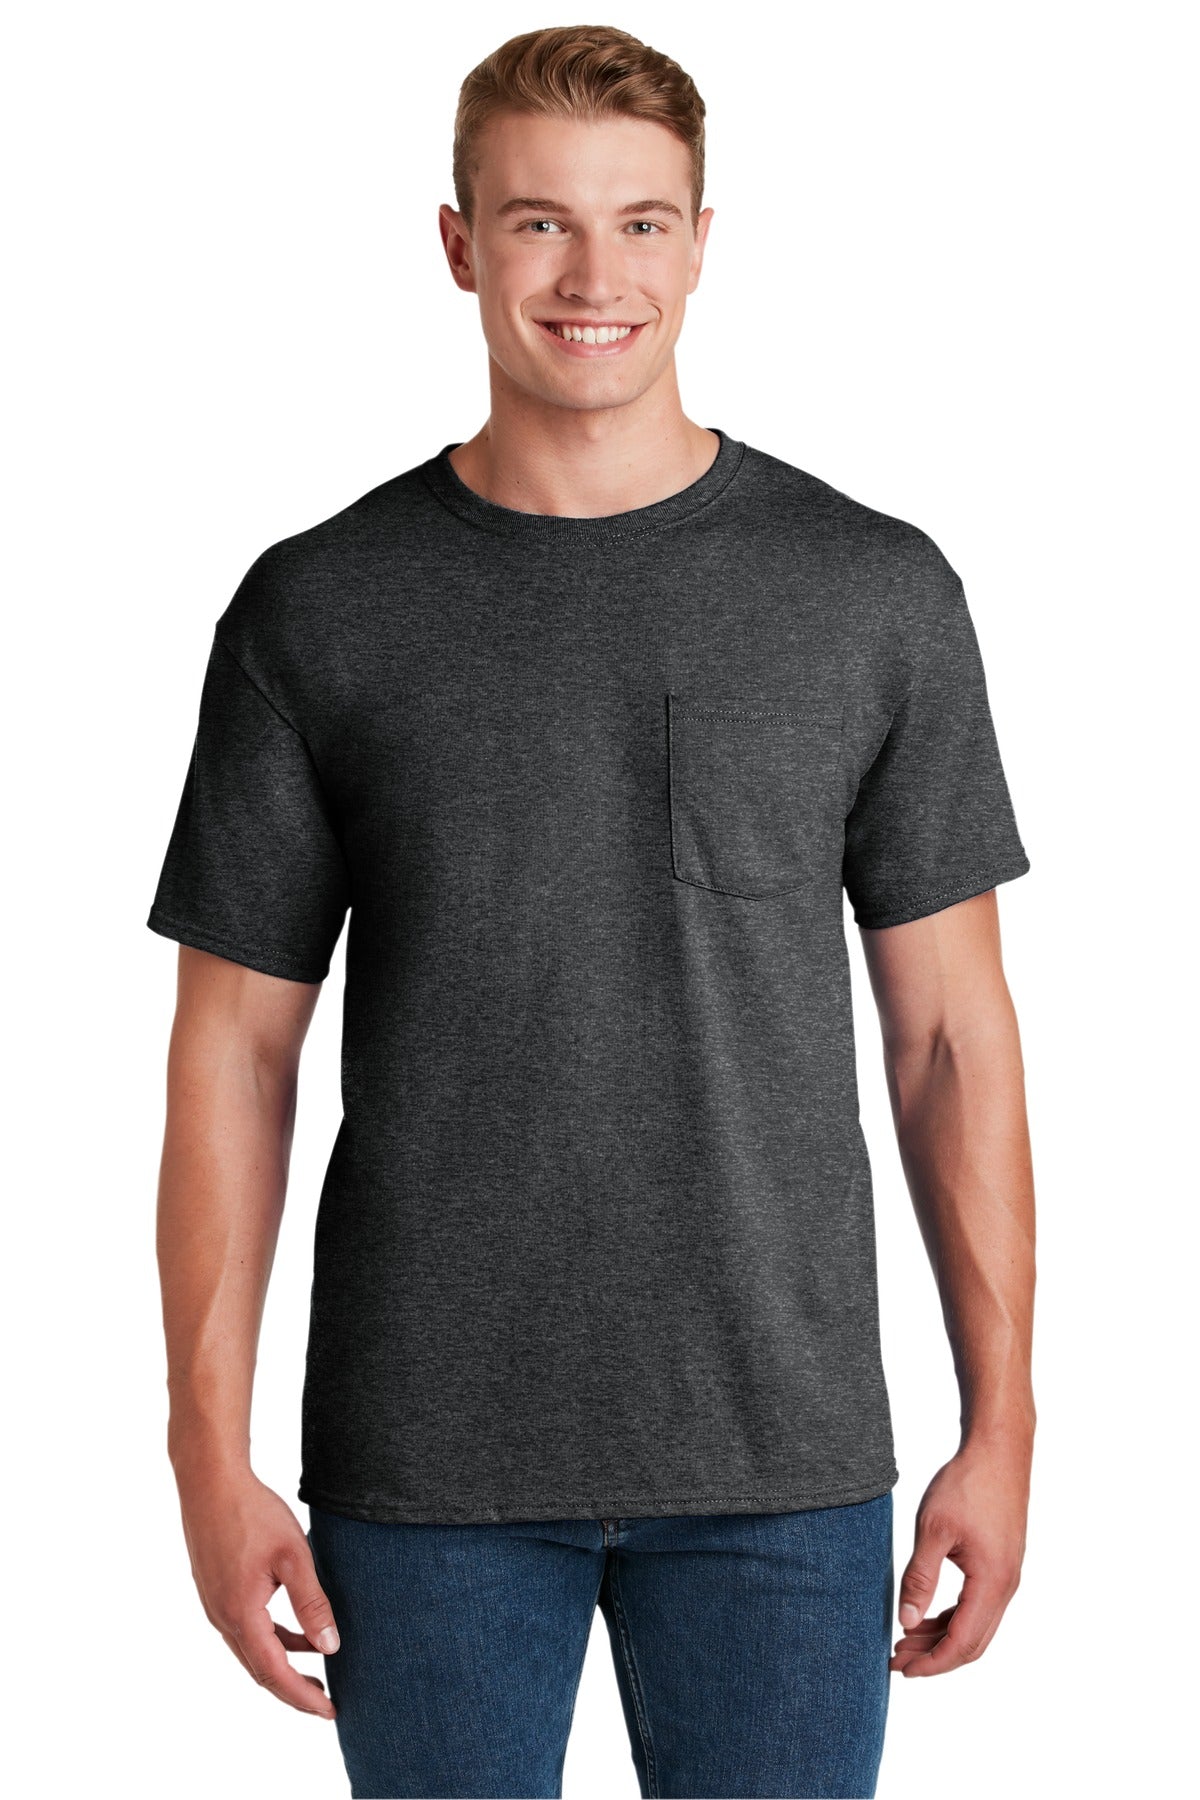 JERZEES® - Dri-Power® 50/50 Cotton/Poly Pocket T-Shirt. 29MP [Black Heather] - DFW Impression